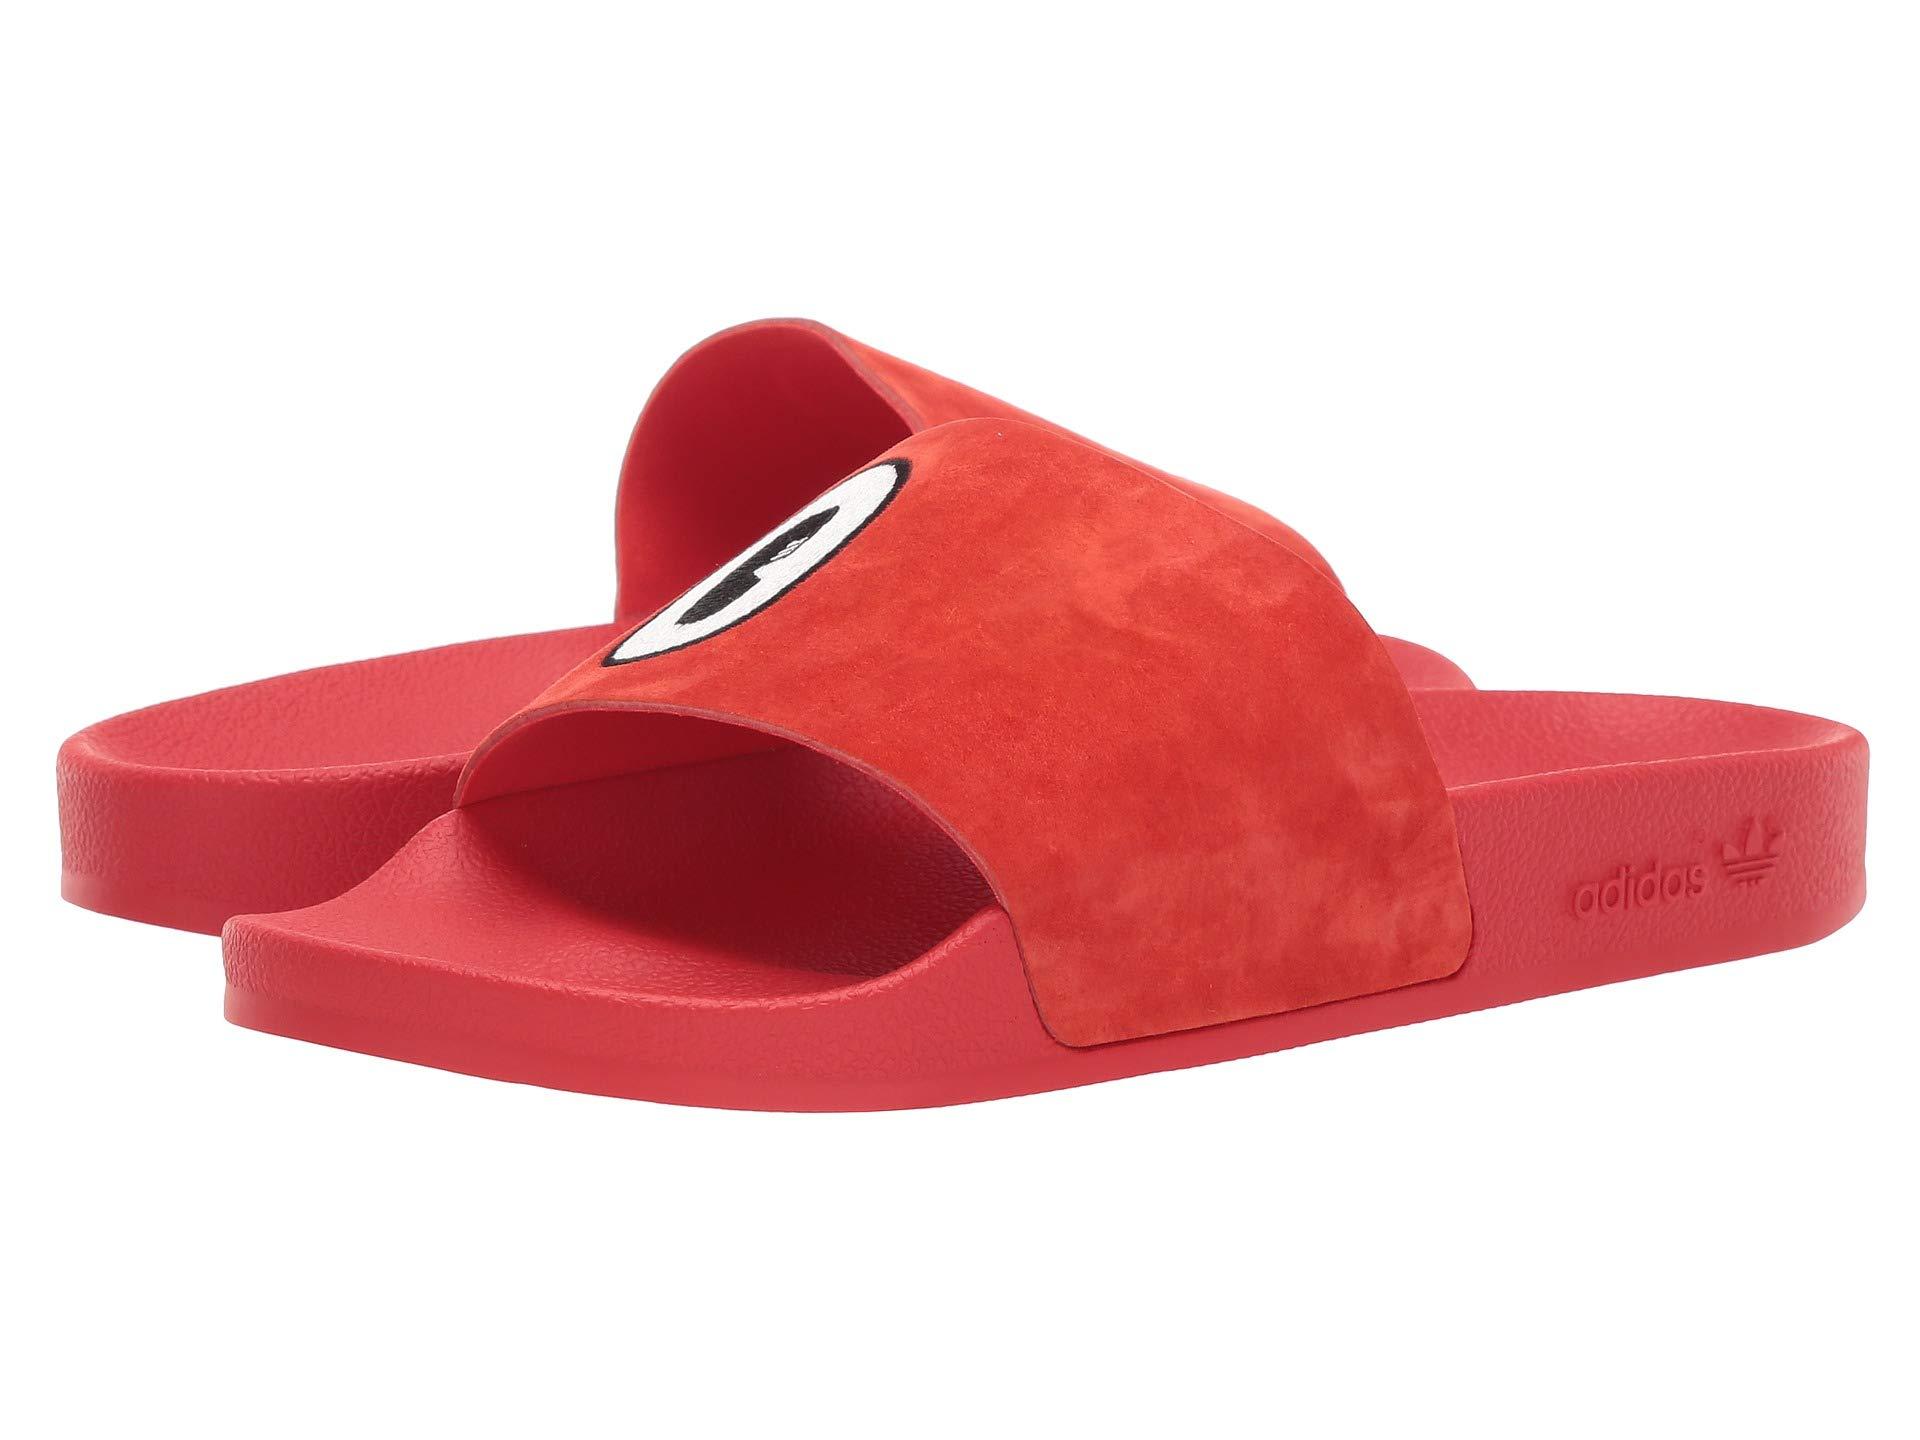  adidas  Adilette  Slide  in Red  Lyst